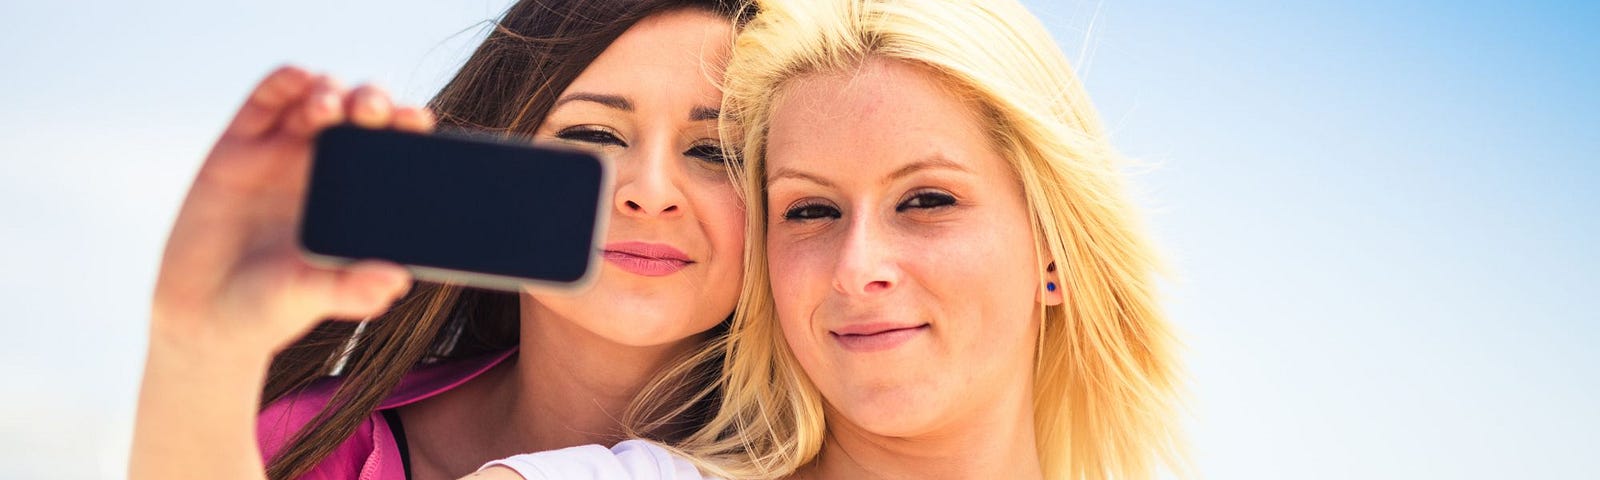 A lesbian couple taking a selfie outdoors